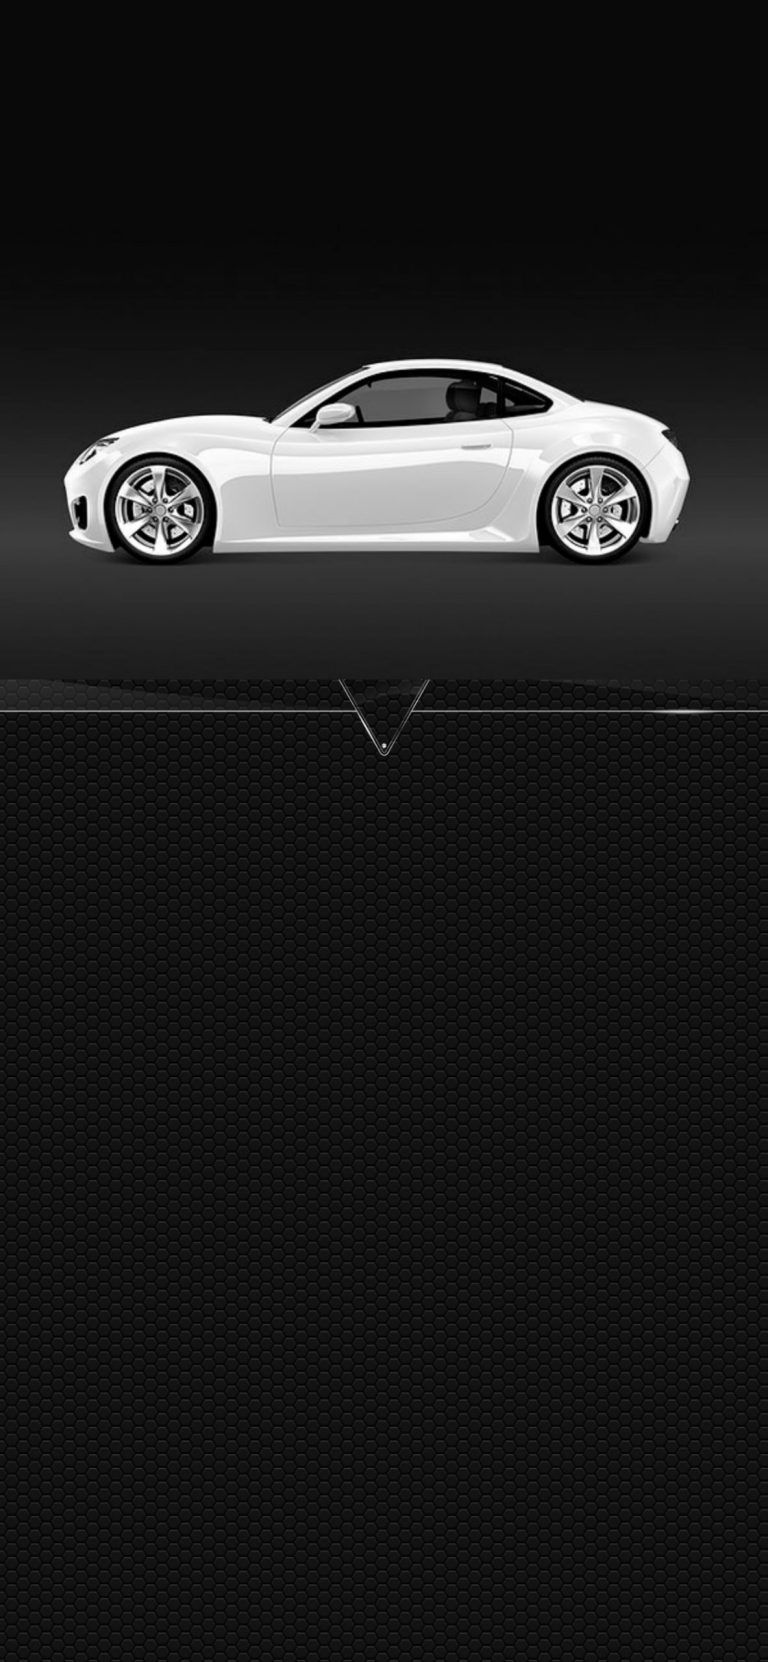 Super Car Black and White Mobile Amoled Wallpaper Download